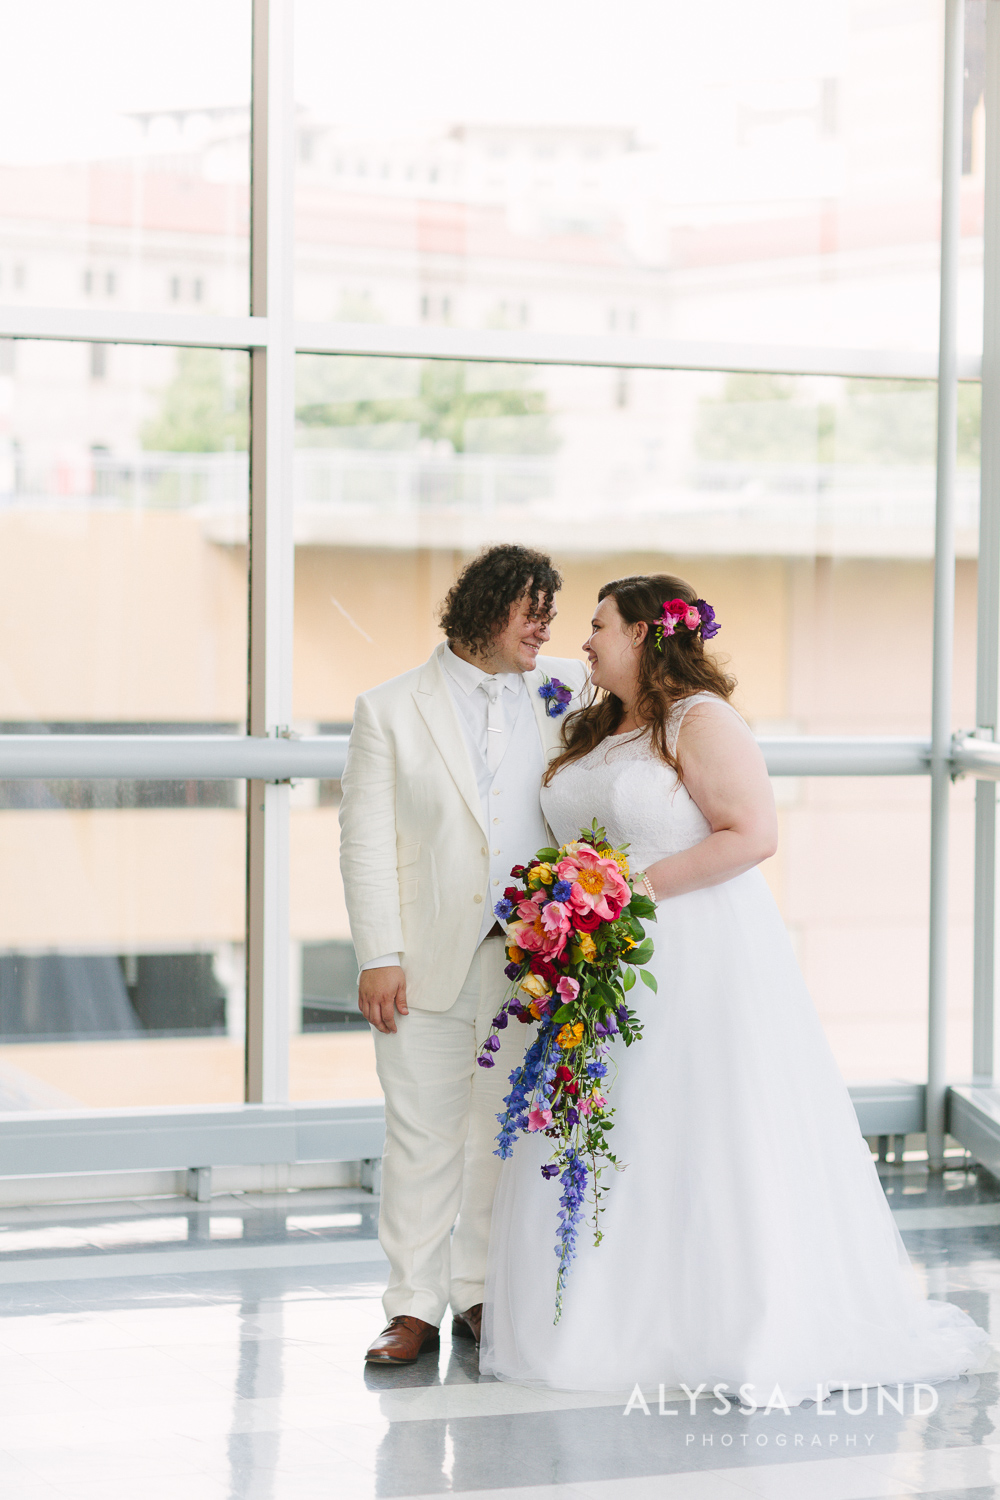 Science Museum of Minnesota Wedding by Alyssa Lund Photography-16.jpg